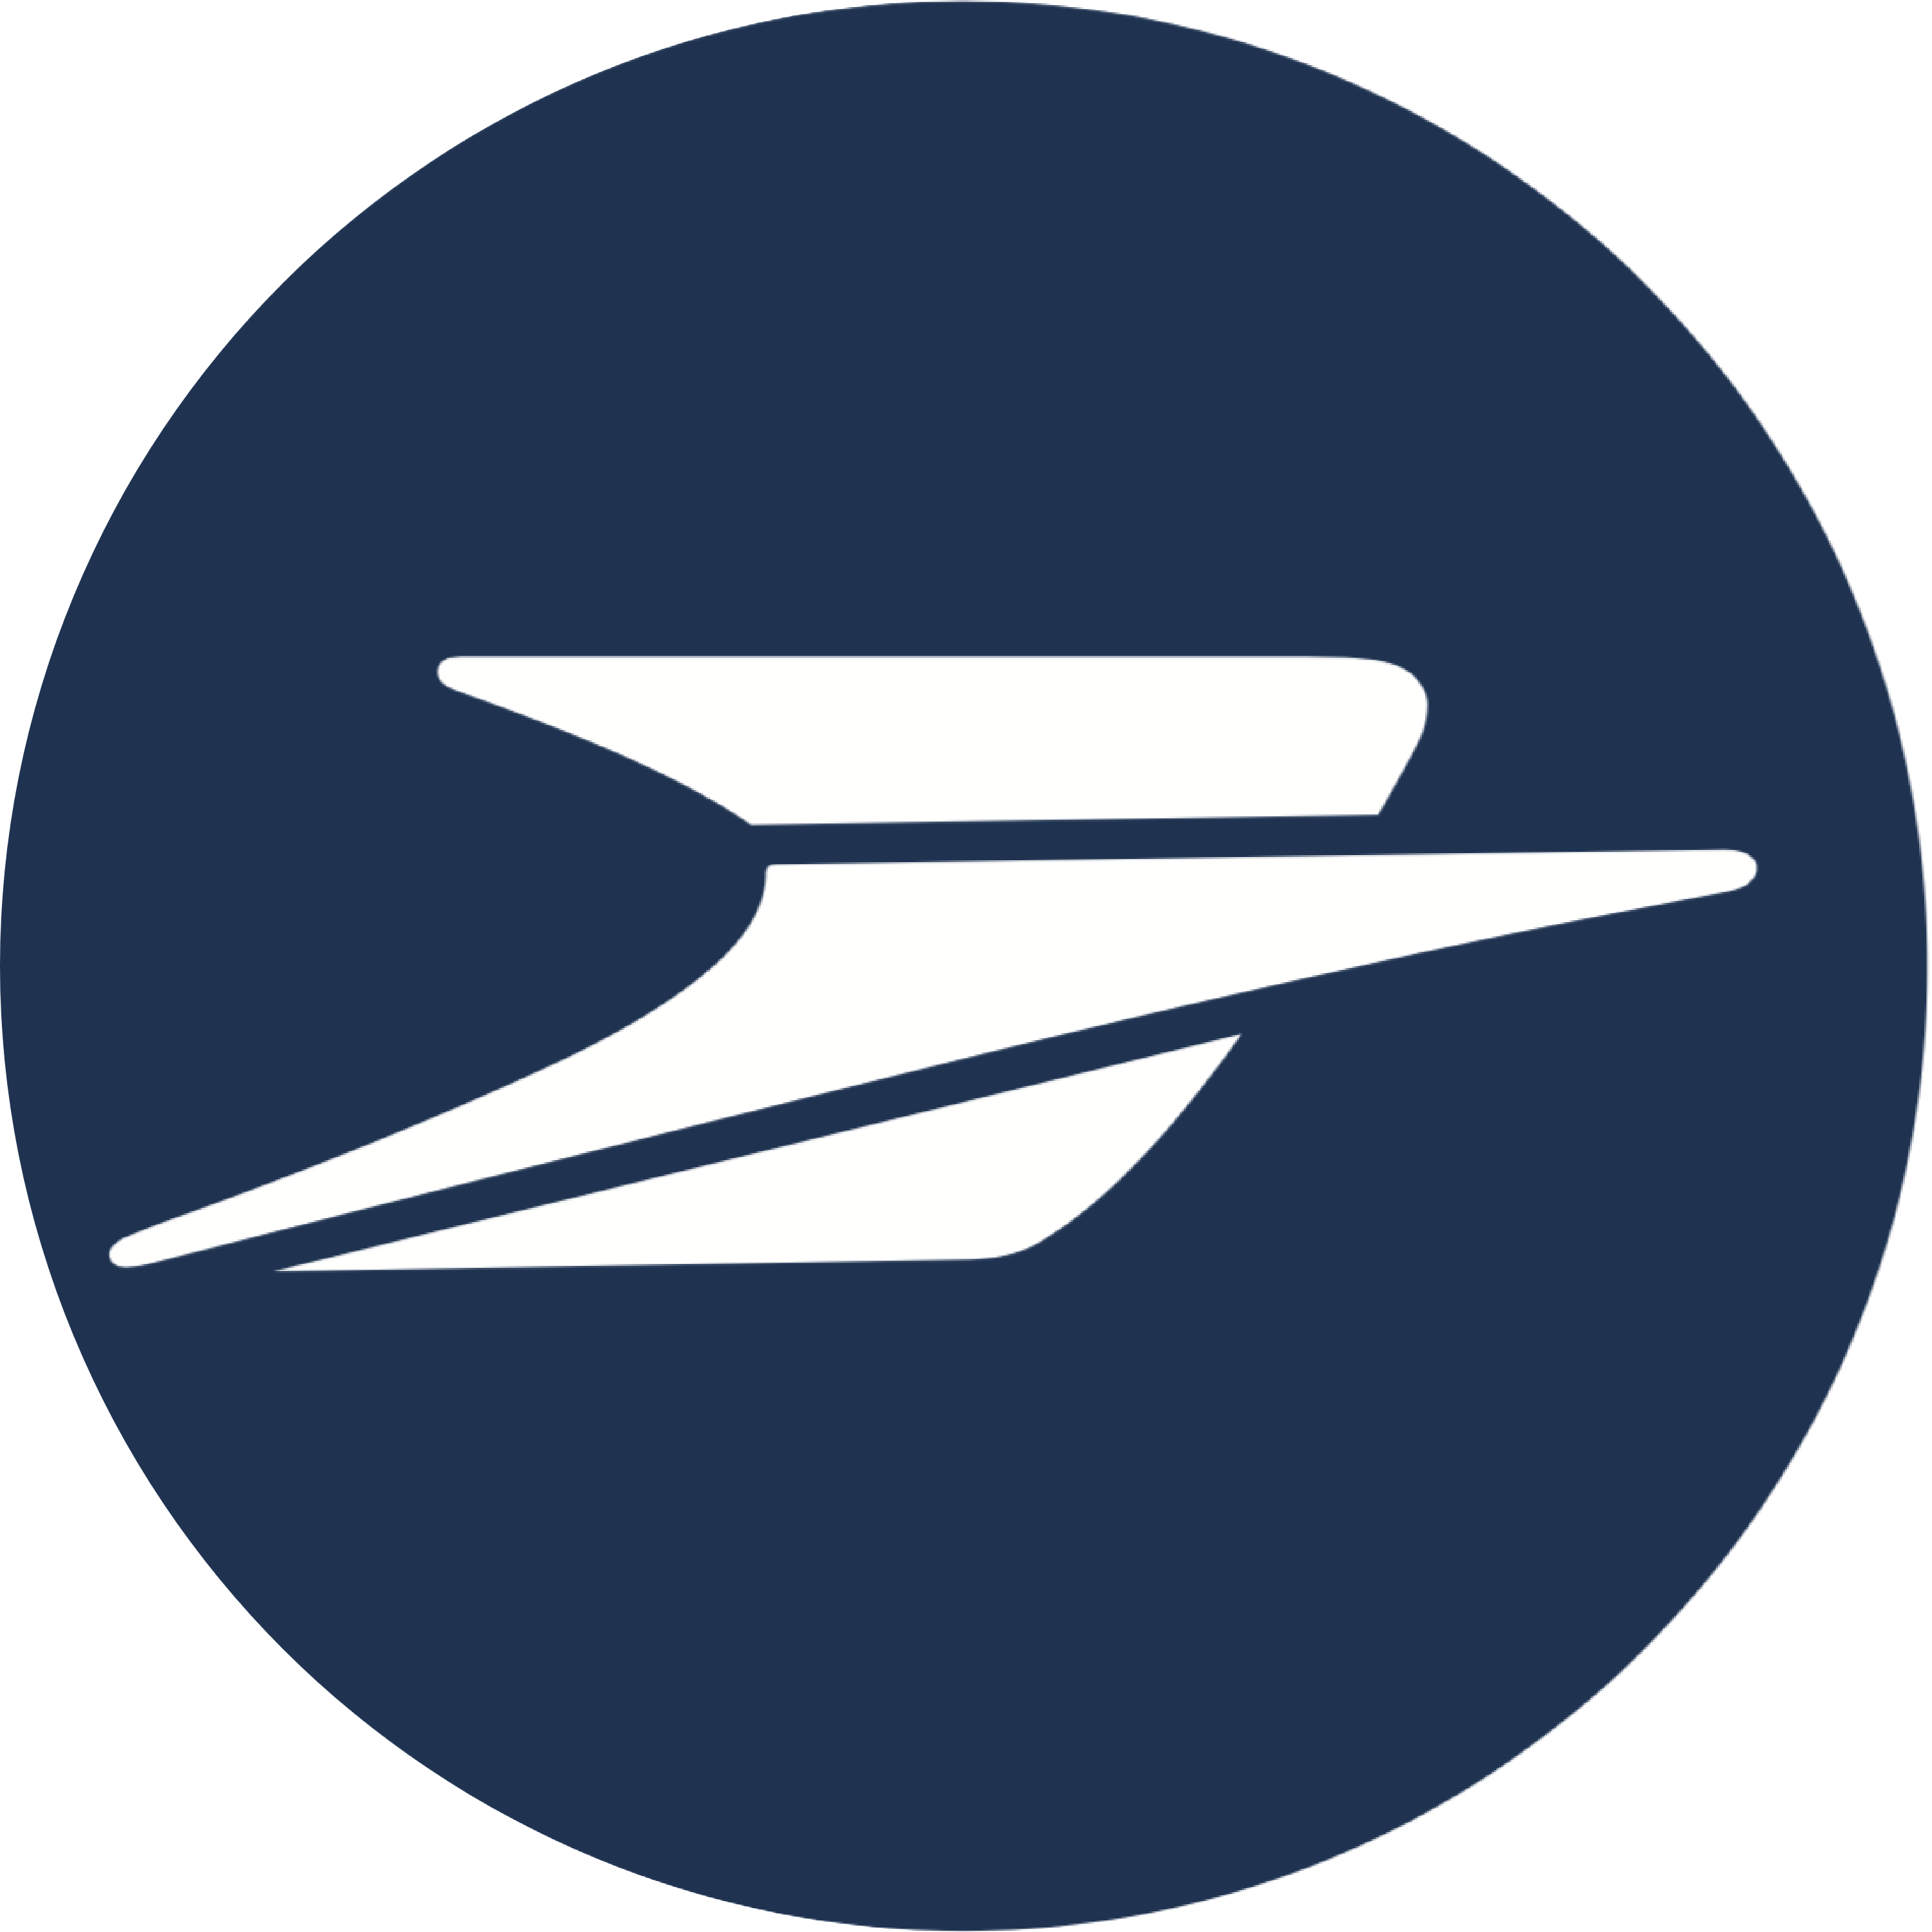 Logo de la banque postal arrondit